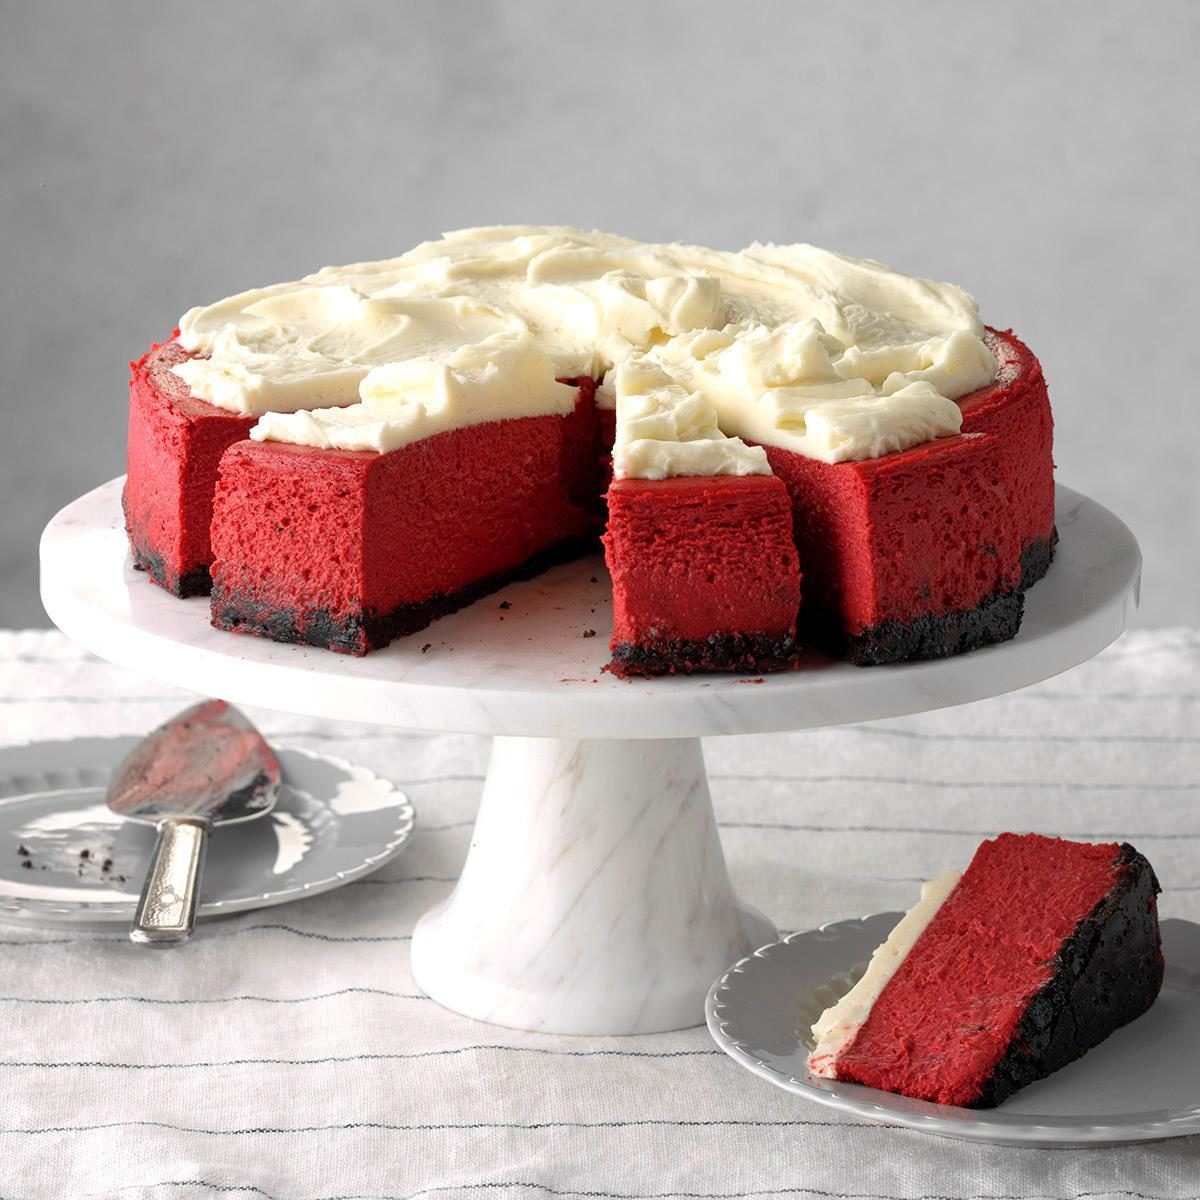 Red Velvet Cheesecake Recipe: How to Make It